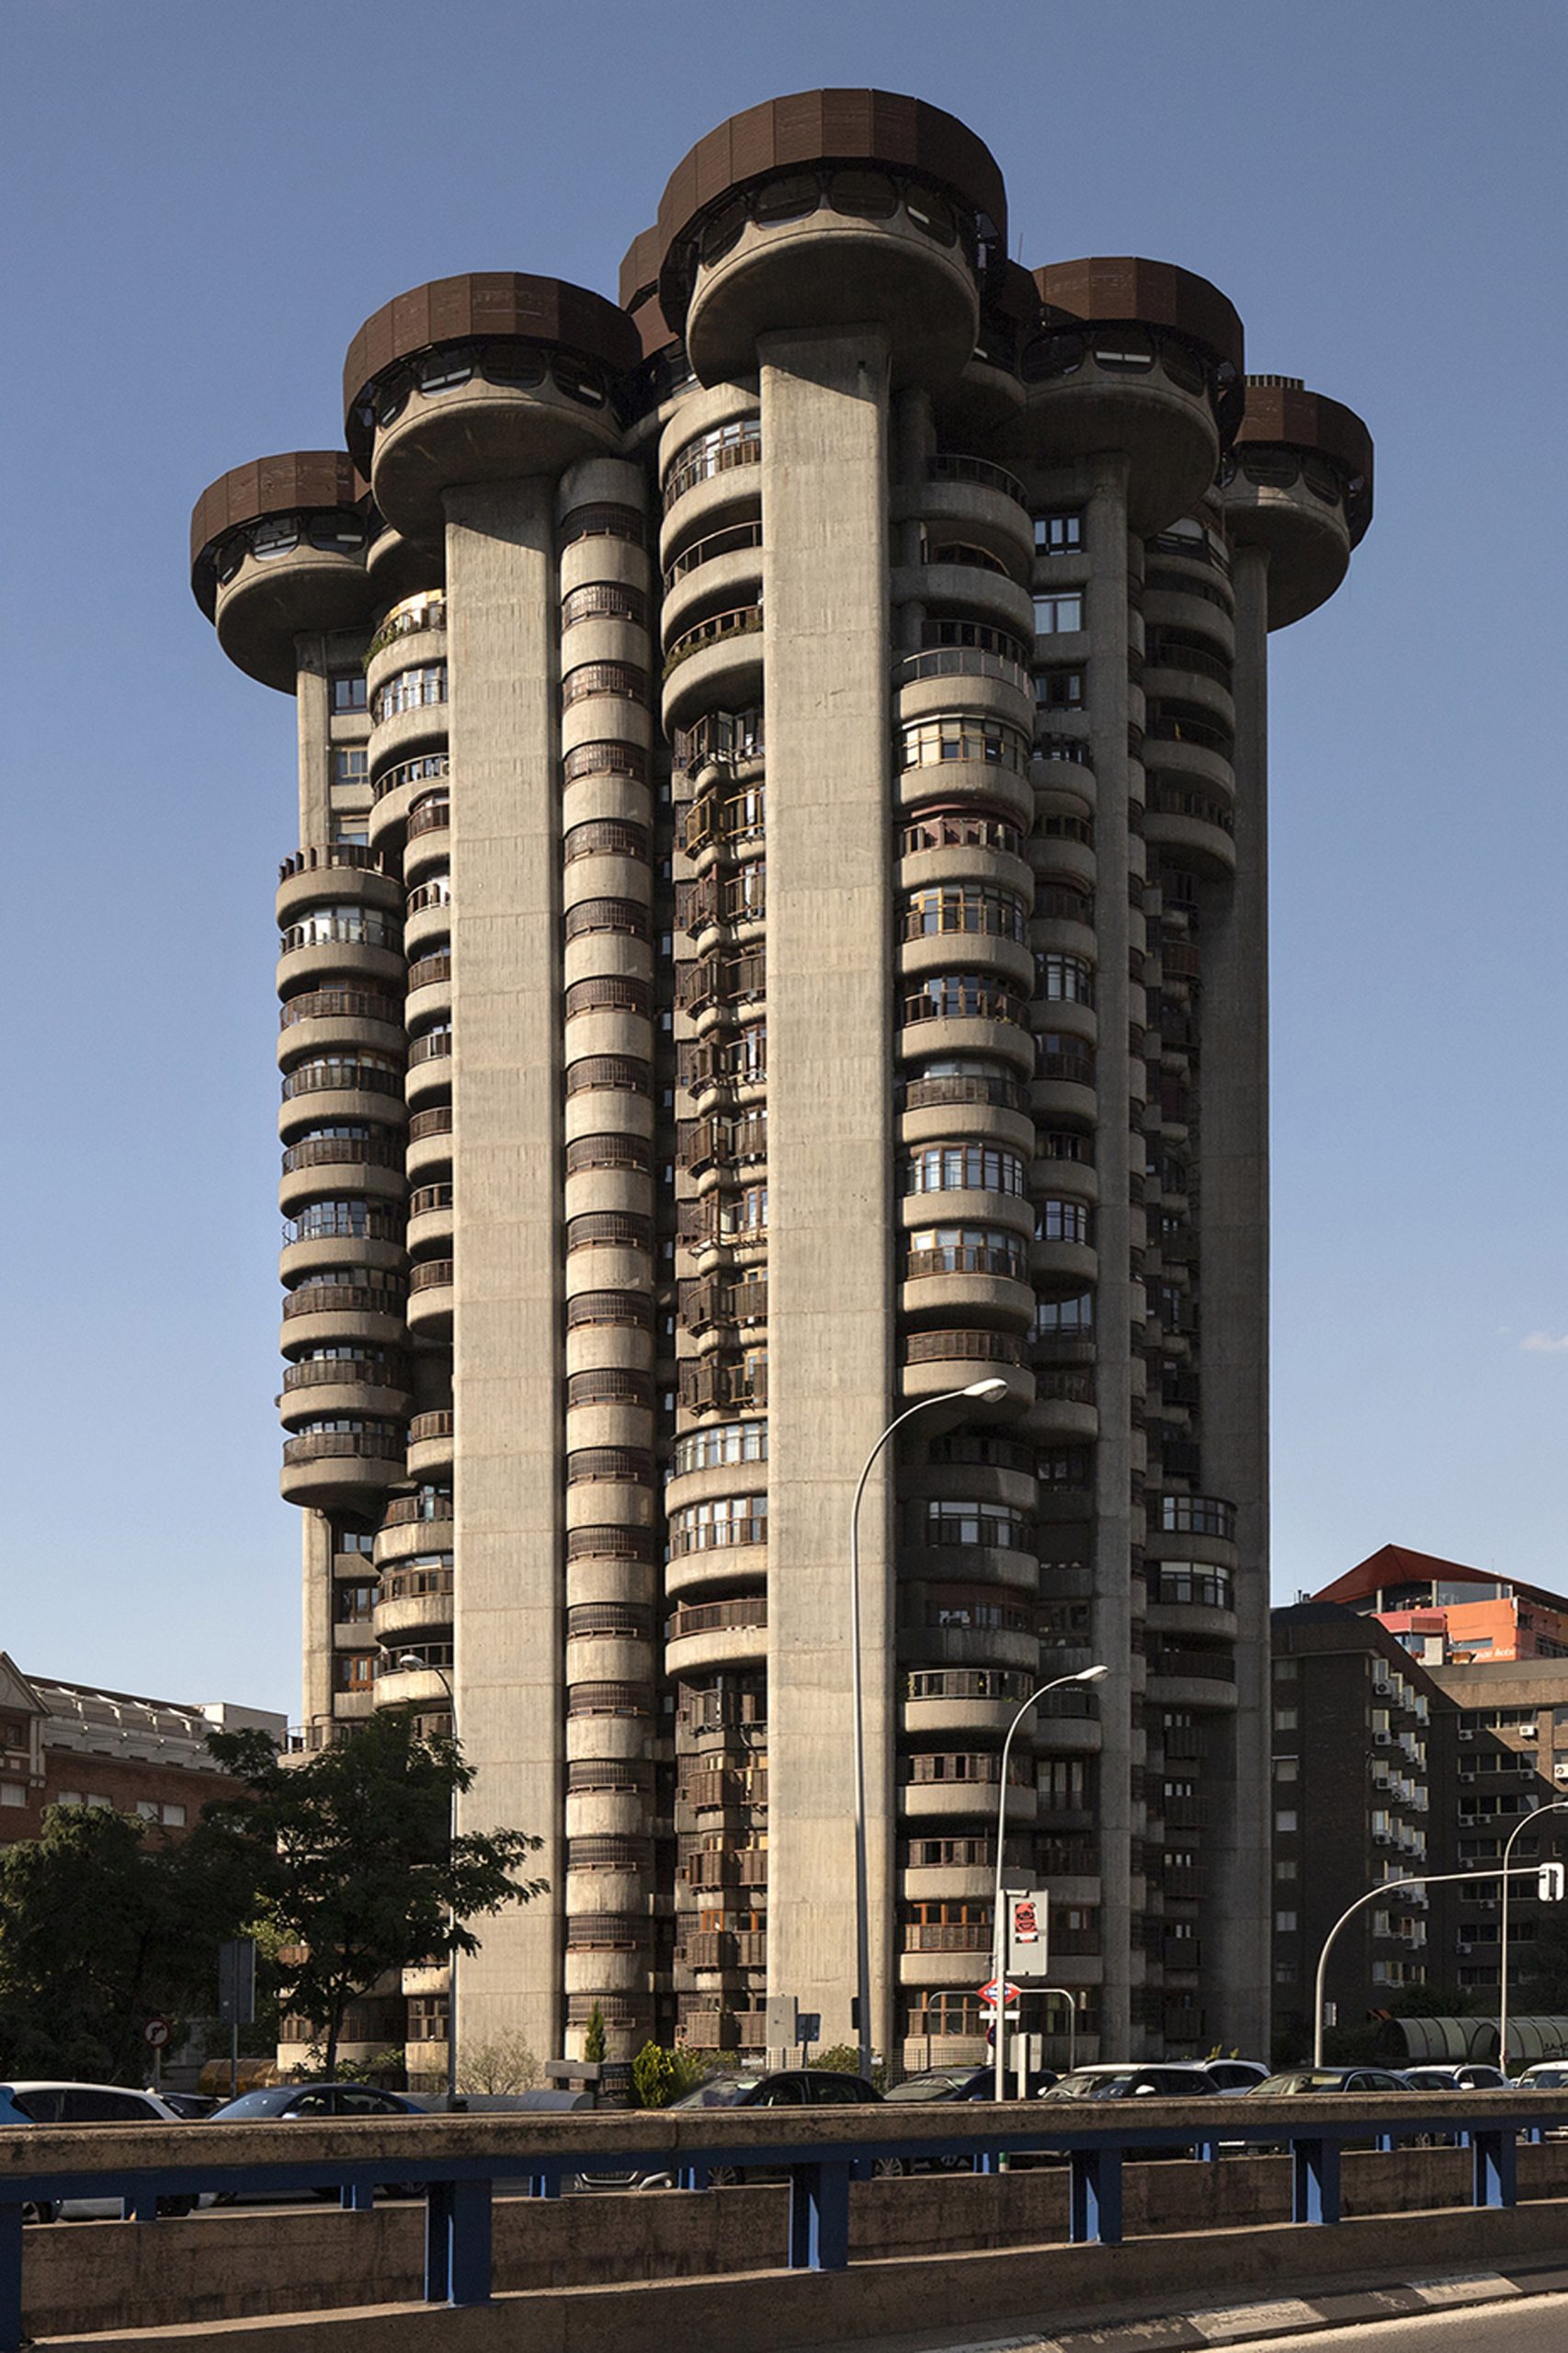 Madrid's brutalist architecture: Torres Blancas